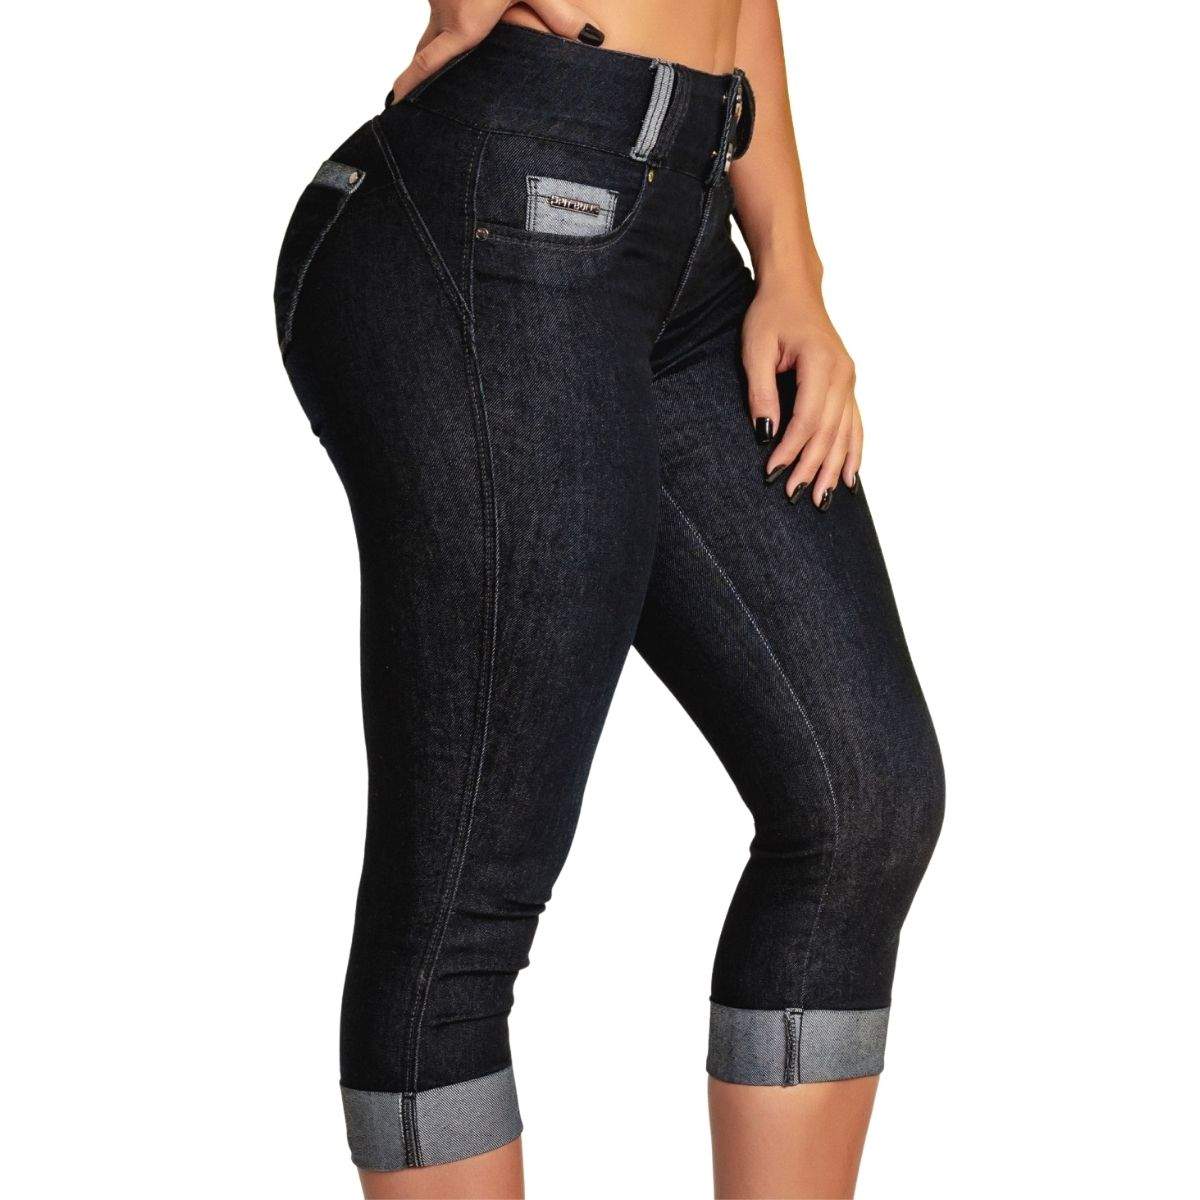 Calça pit bull jeans escuro feminina empina bumbum 60125 - R